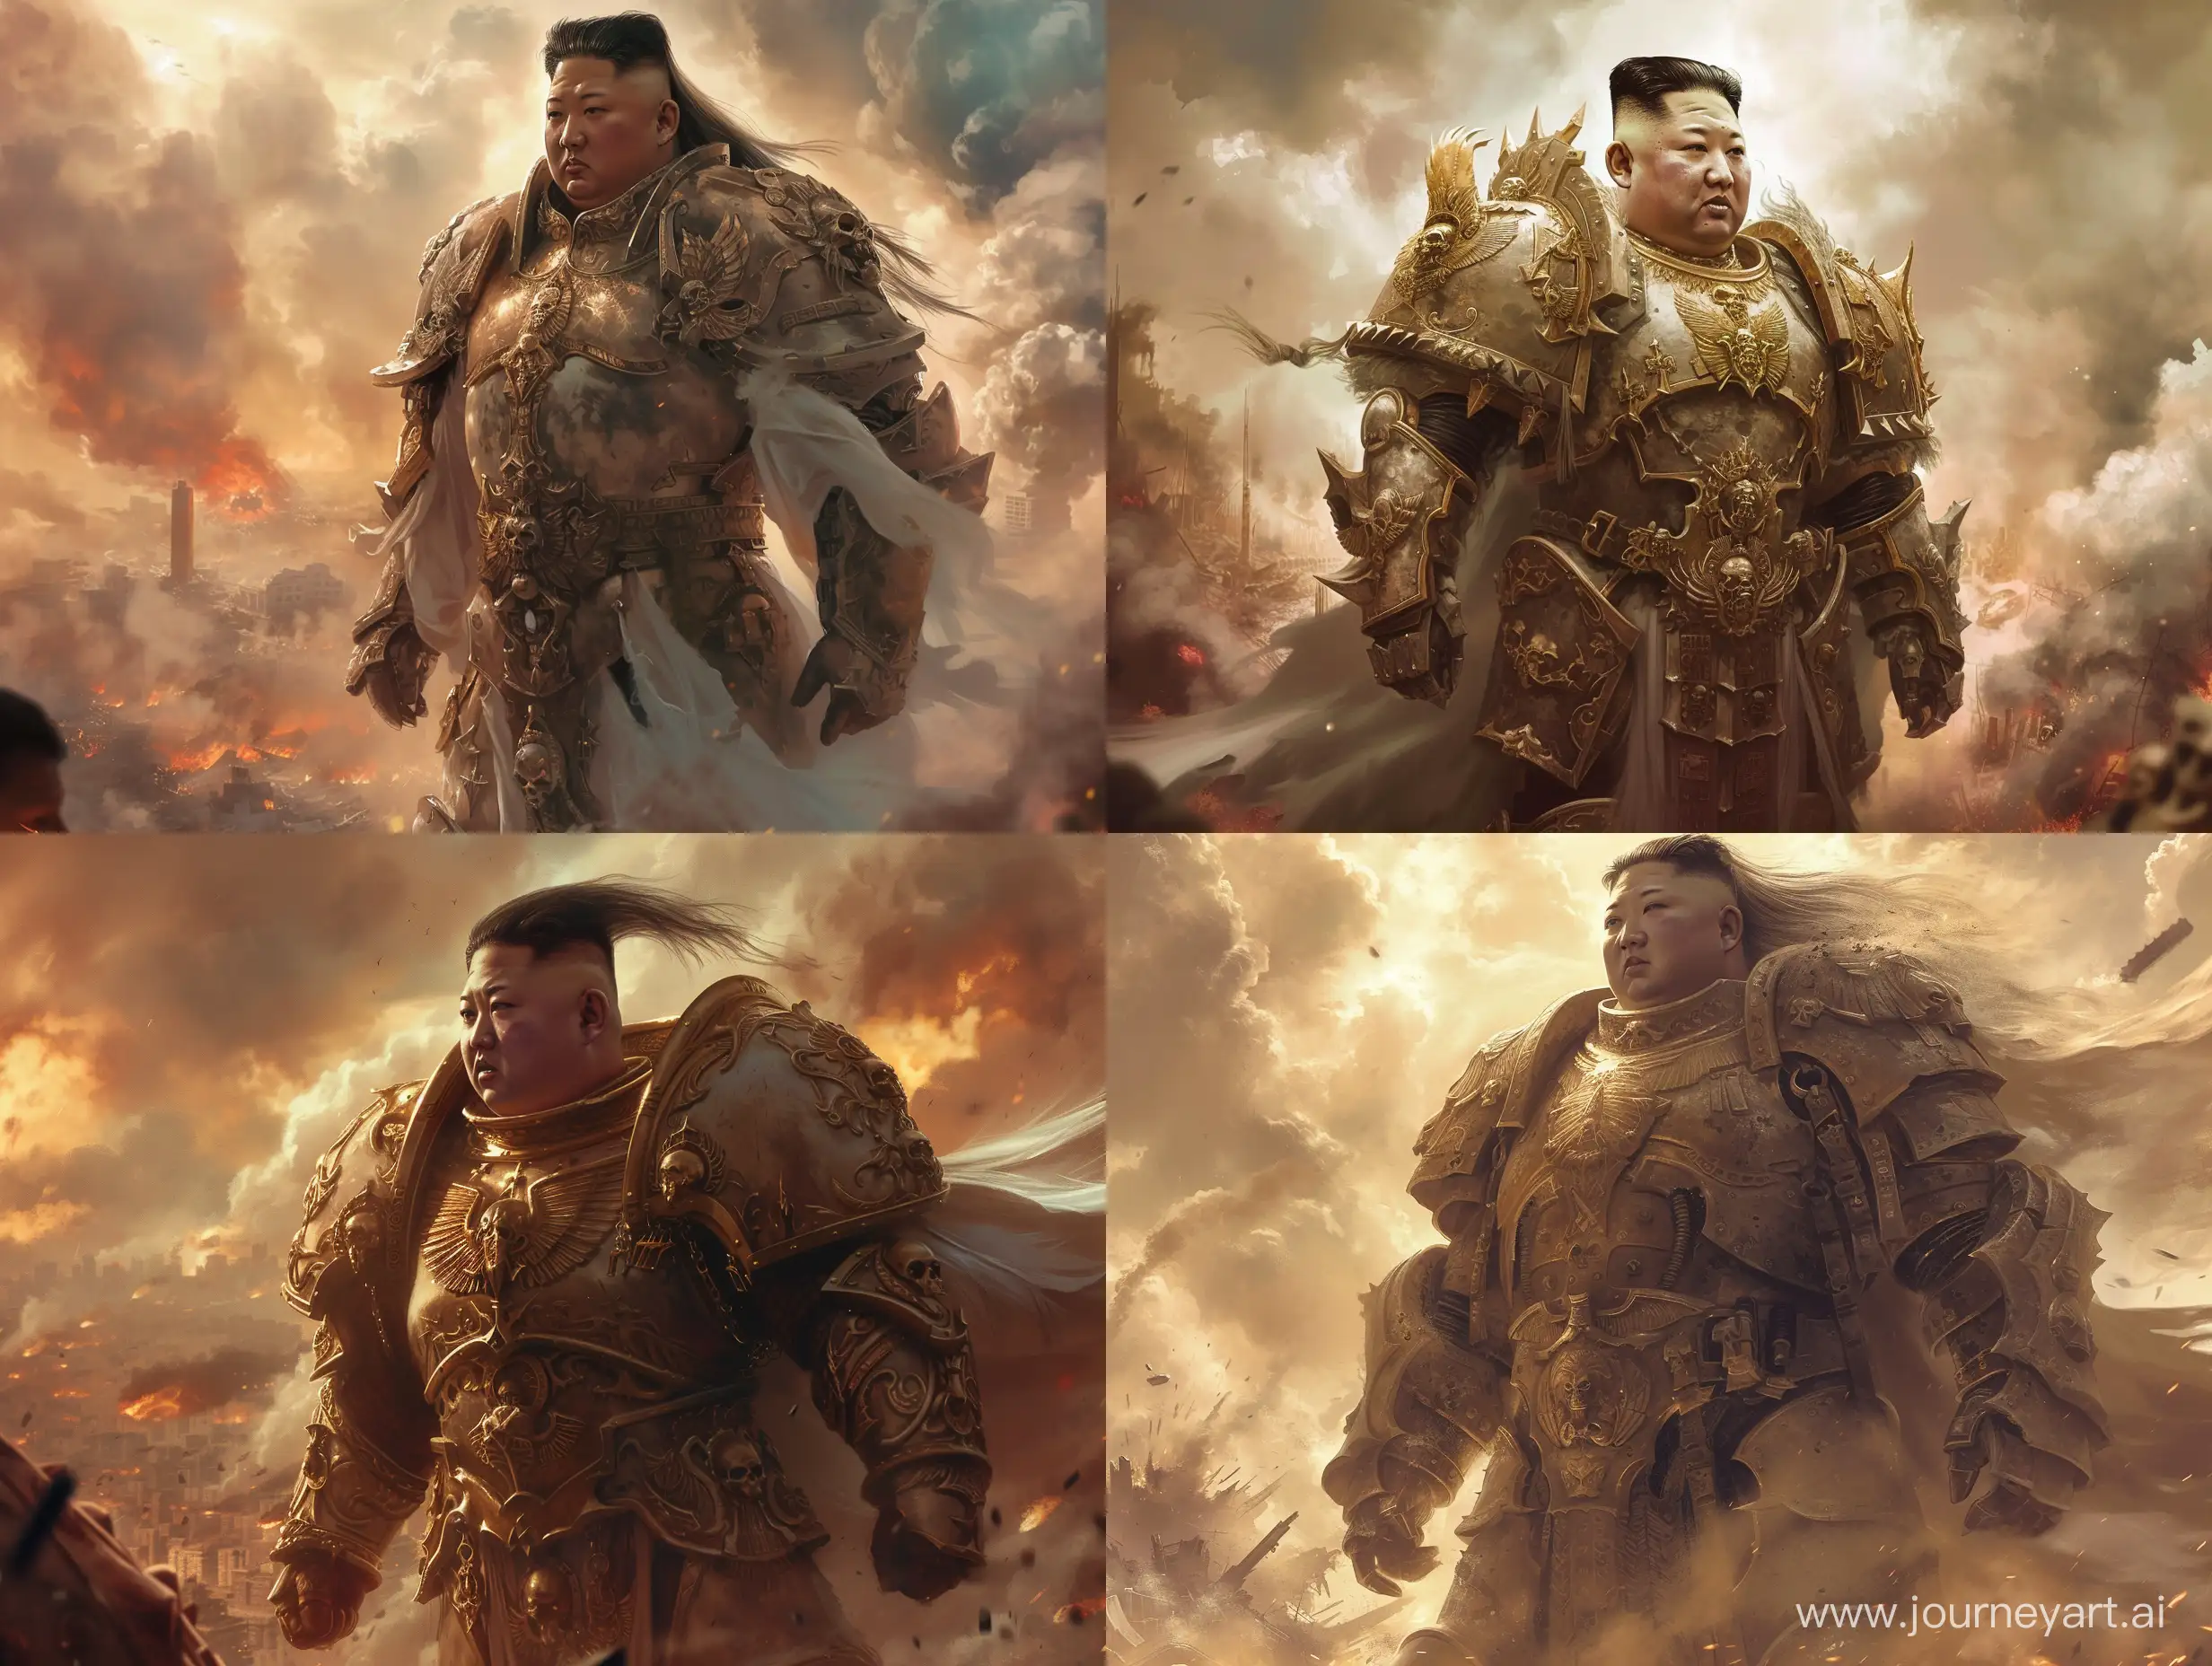 Epic-Nuclear-Warlord-Kim-Jong-Un-in-Divine-Armor-amidst-Devastation